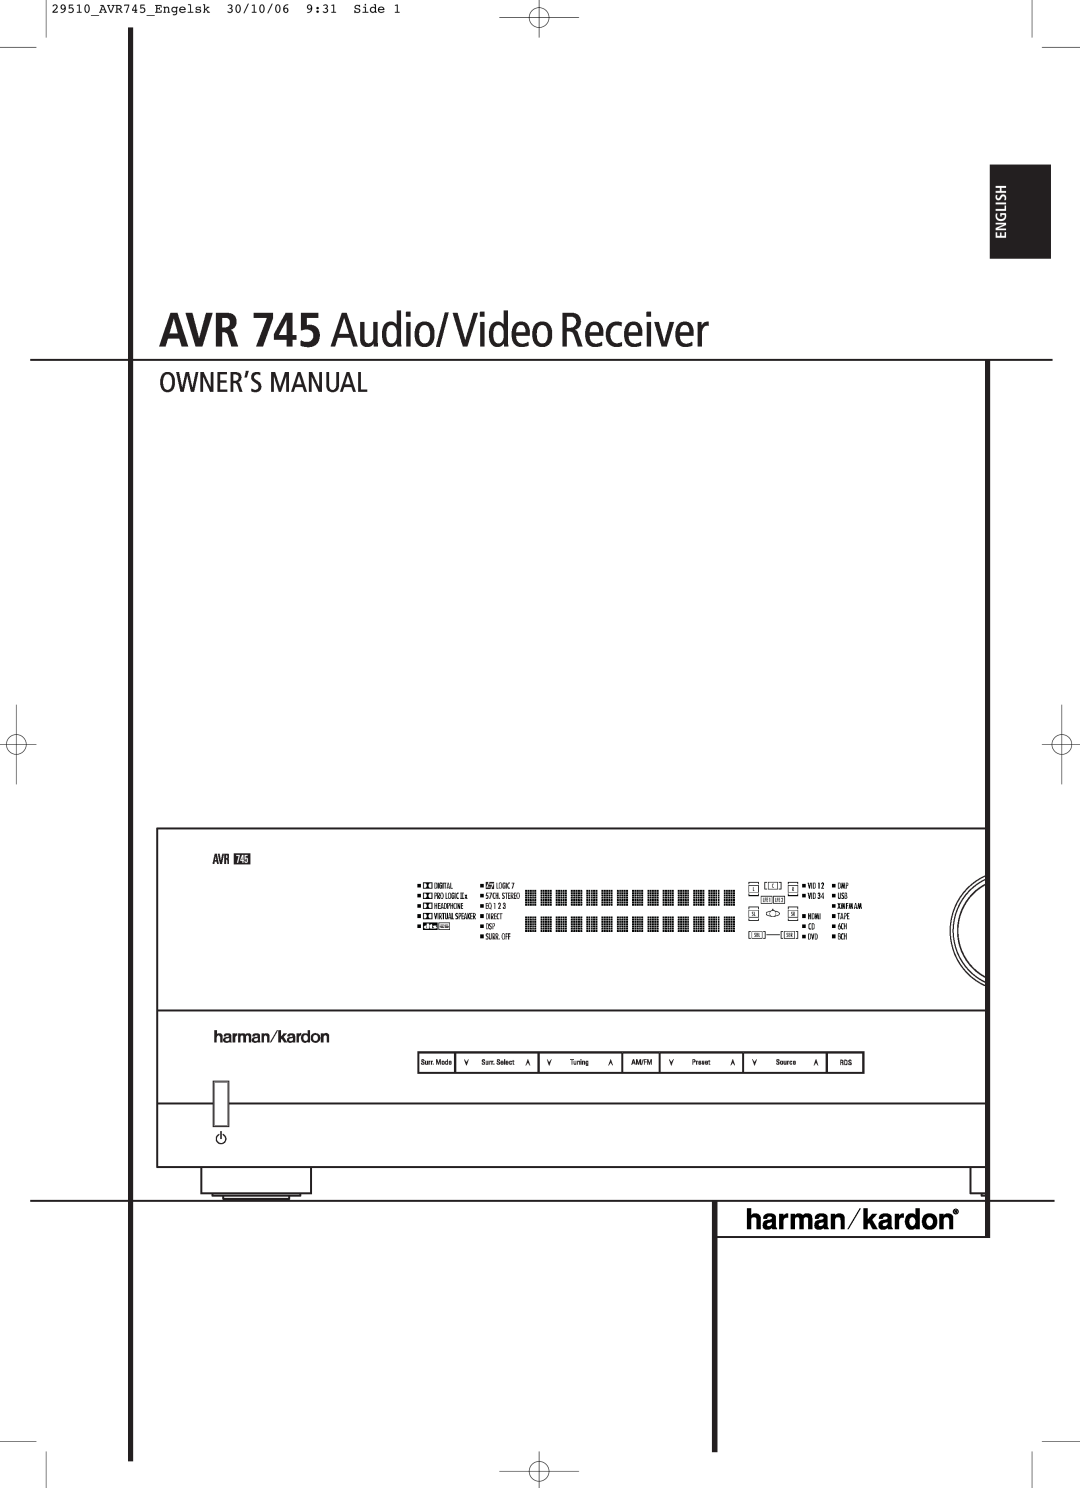 Harman-Kardon owner manual English, 29510_AVR745_Engelsk 30/10/06 9:31 Side, AVR 745 Audio/ Video Receiver 